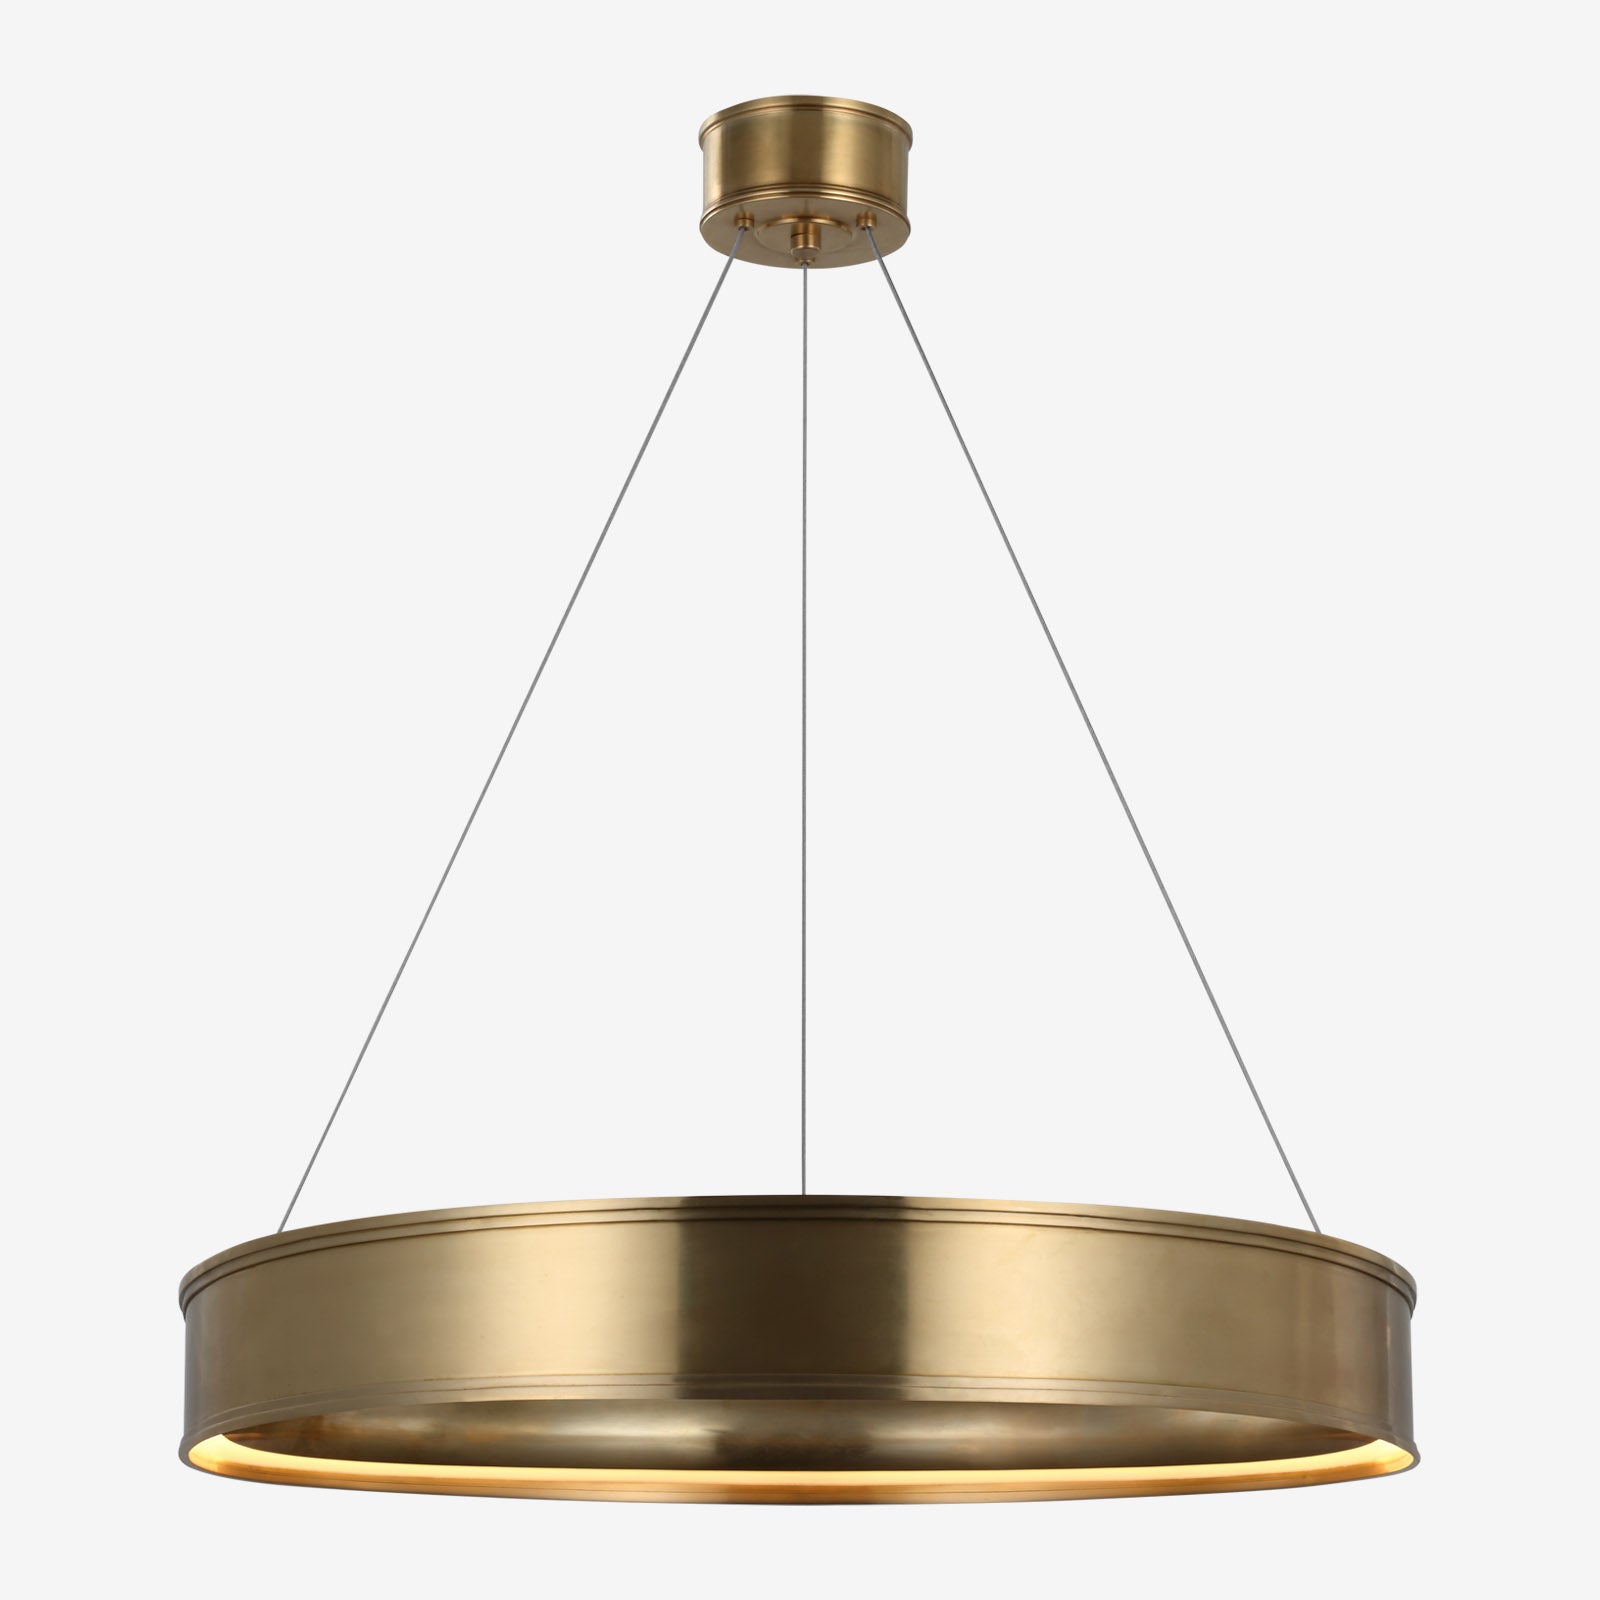 Ring chandelier, 80cm, 24K gold plated